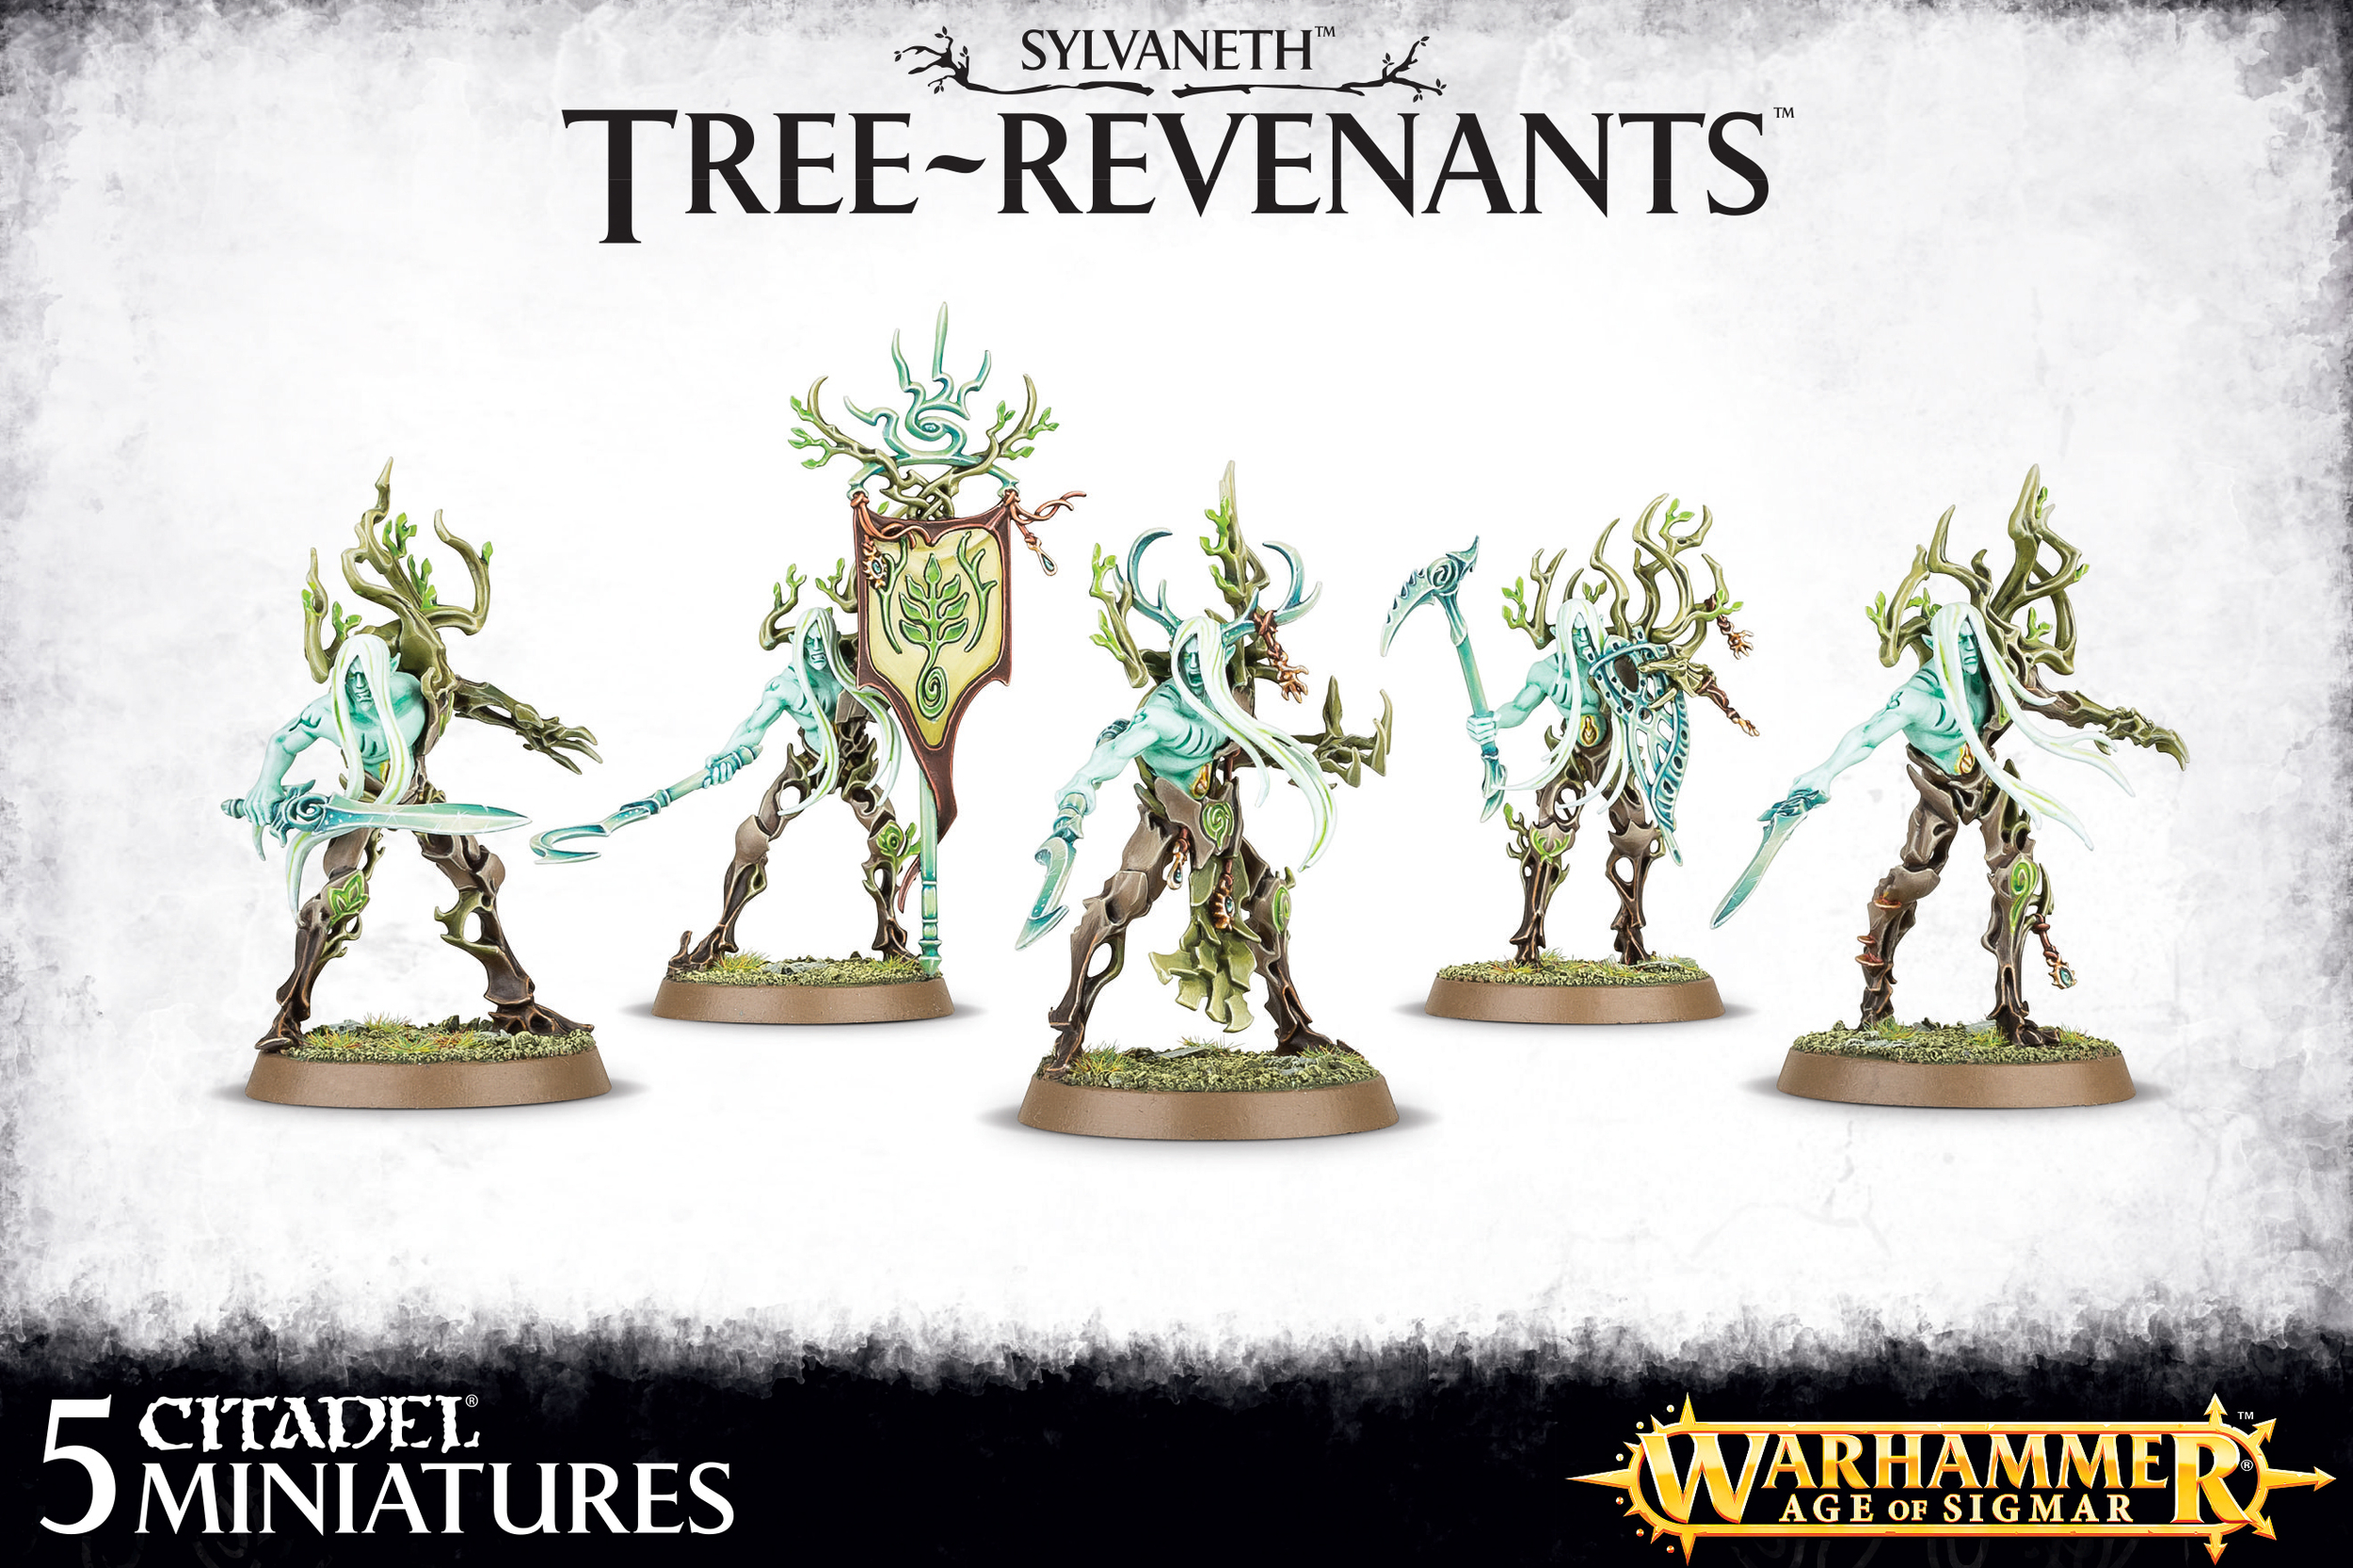 Tree-Revenants - 92-14 - Sylvaneth - Warhammer Age of Sigmar